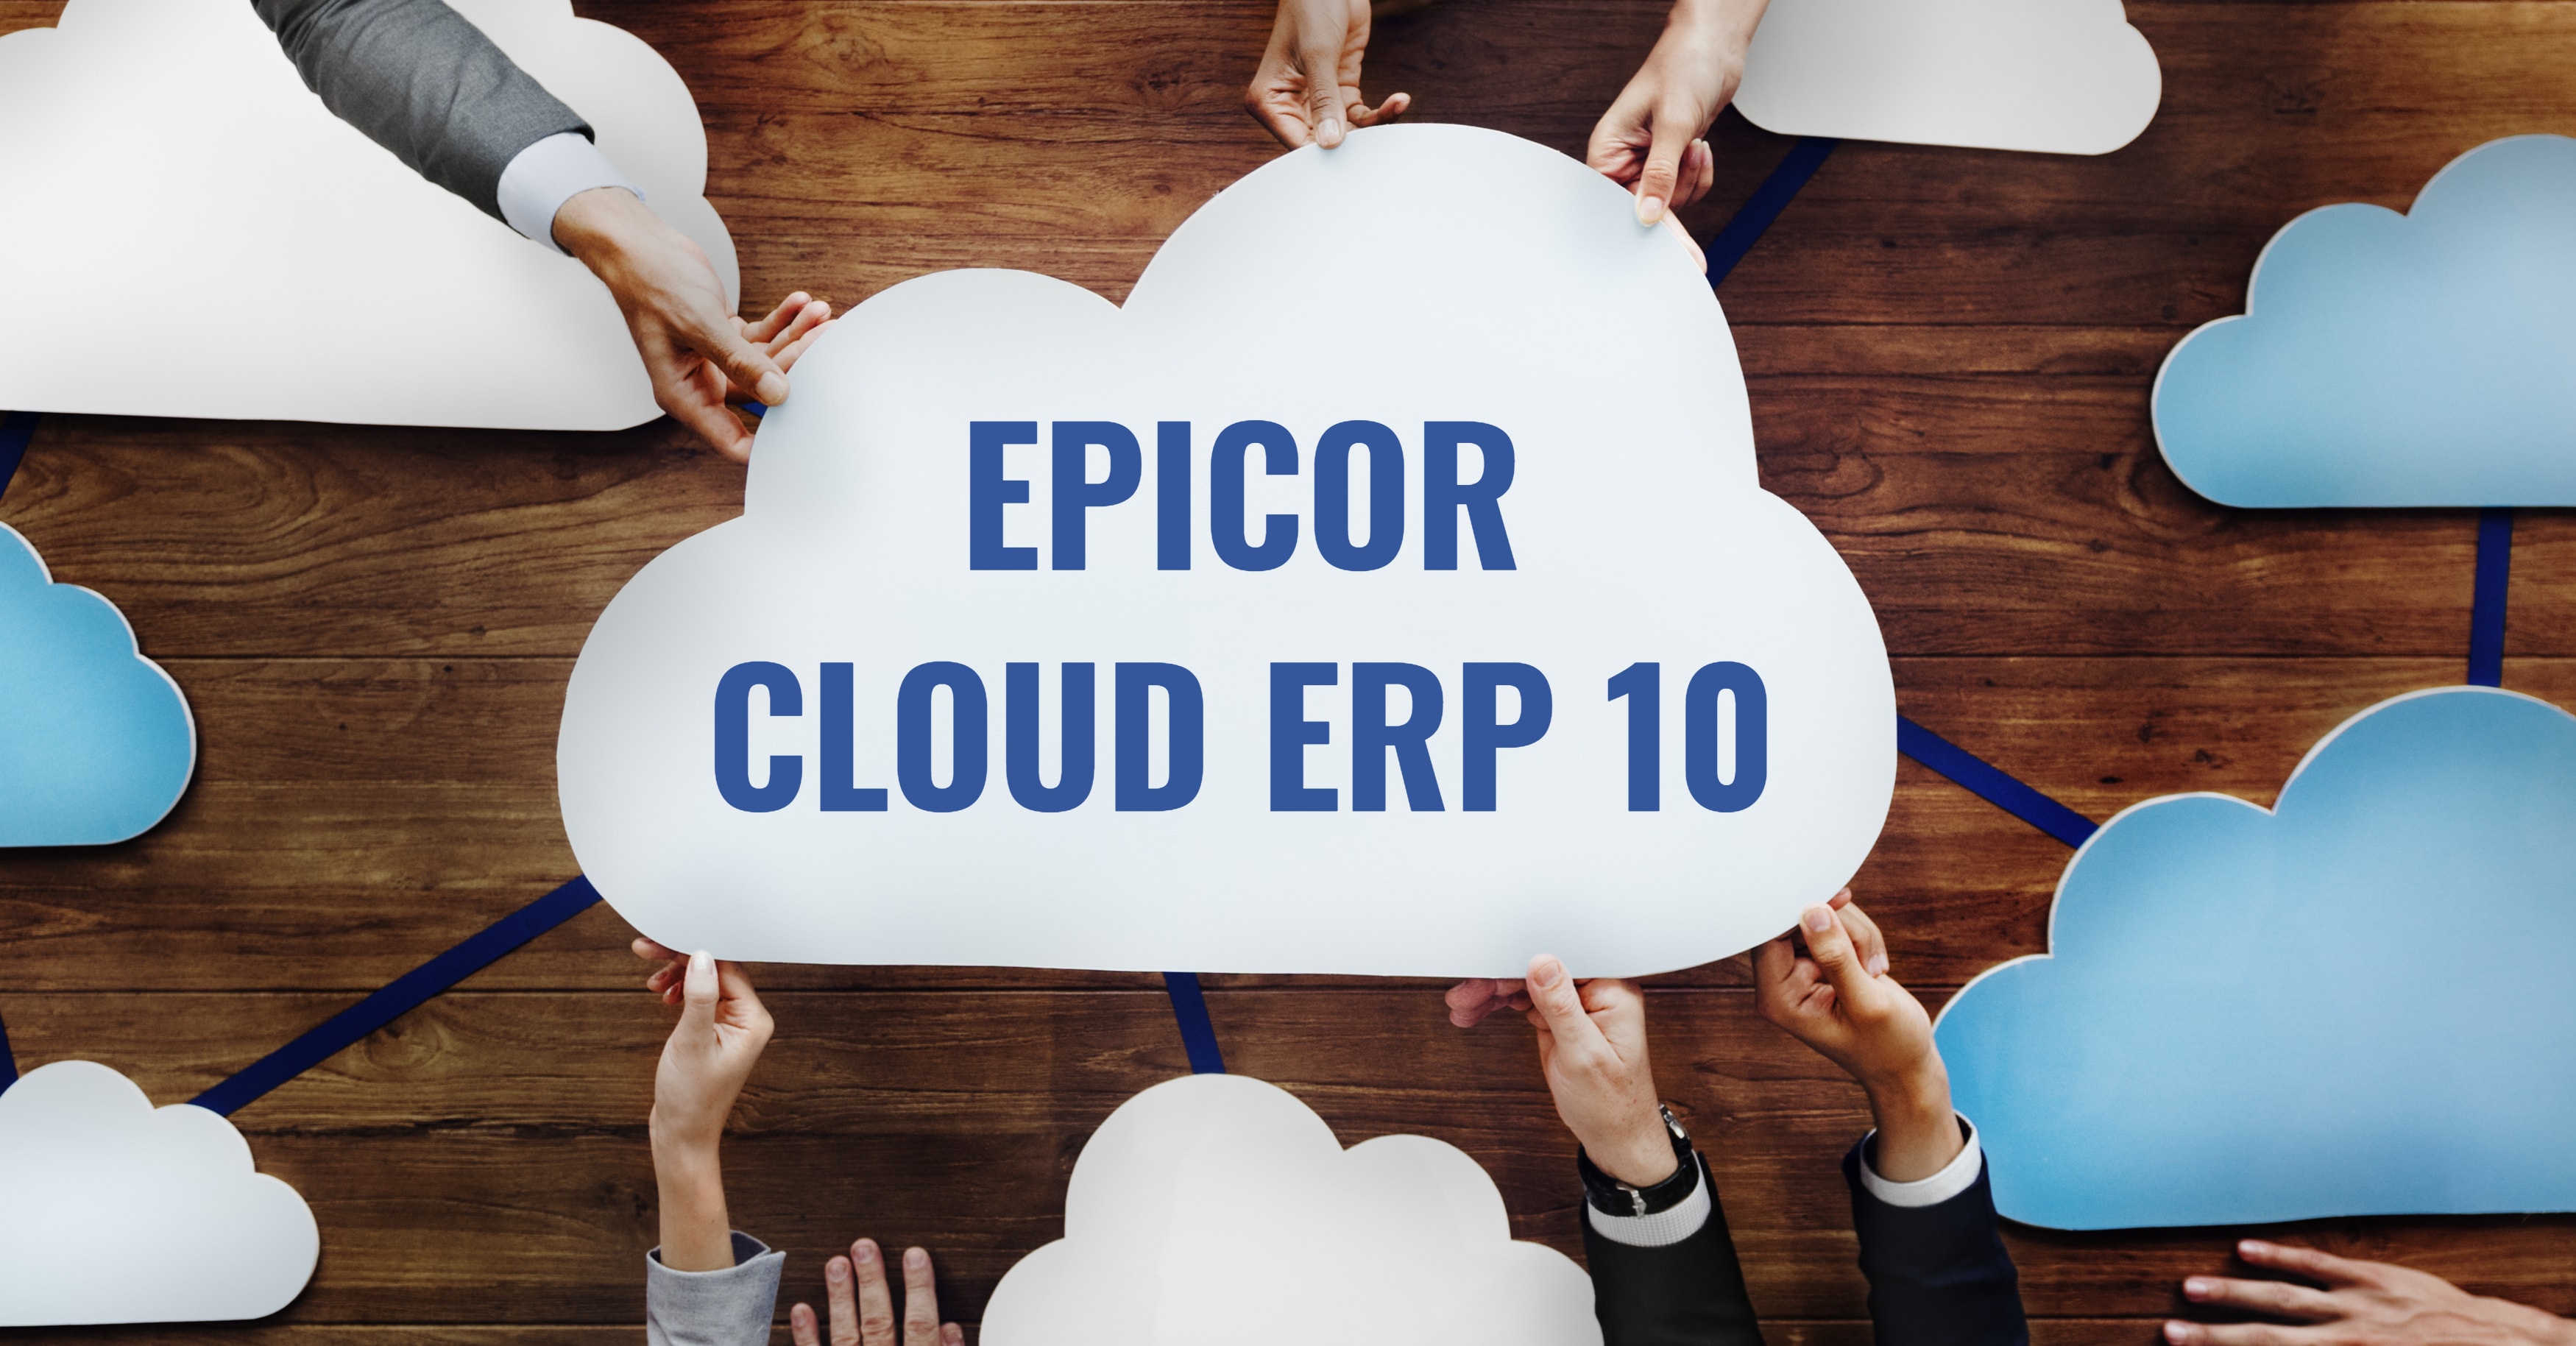 Epicor Cloud ERP 10